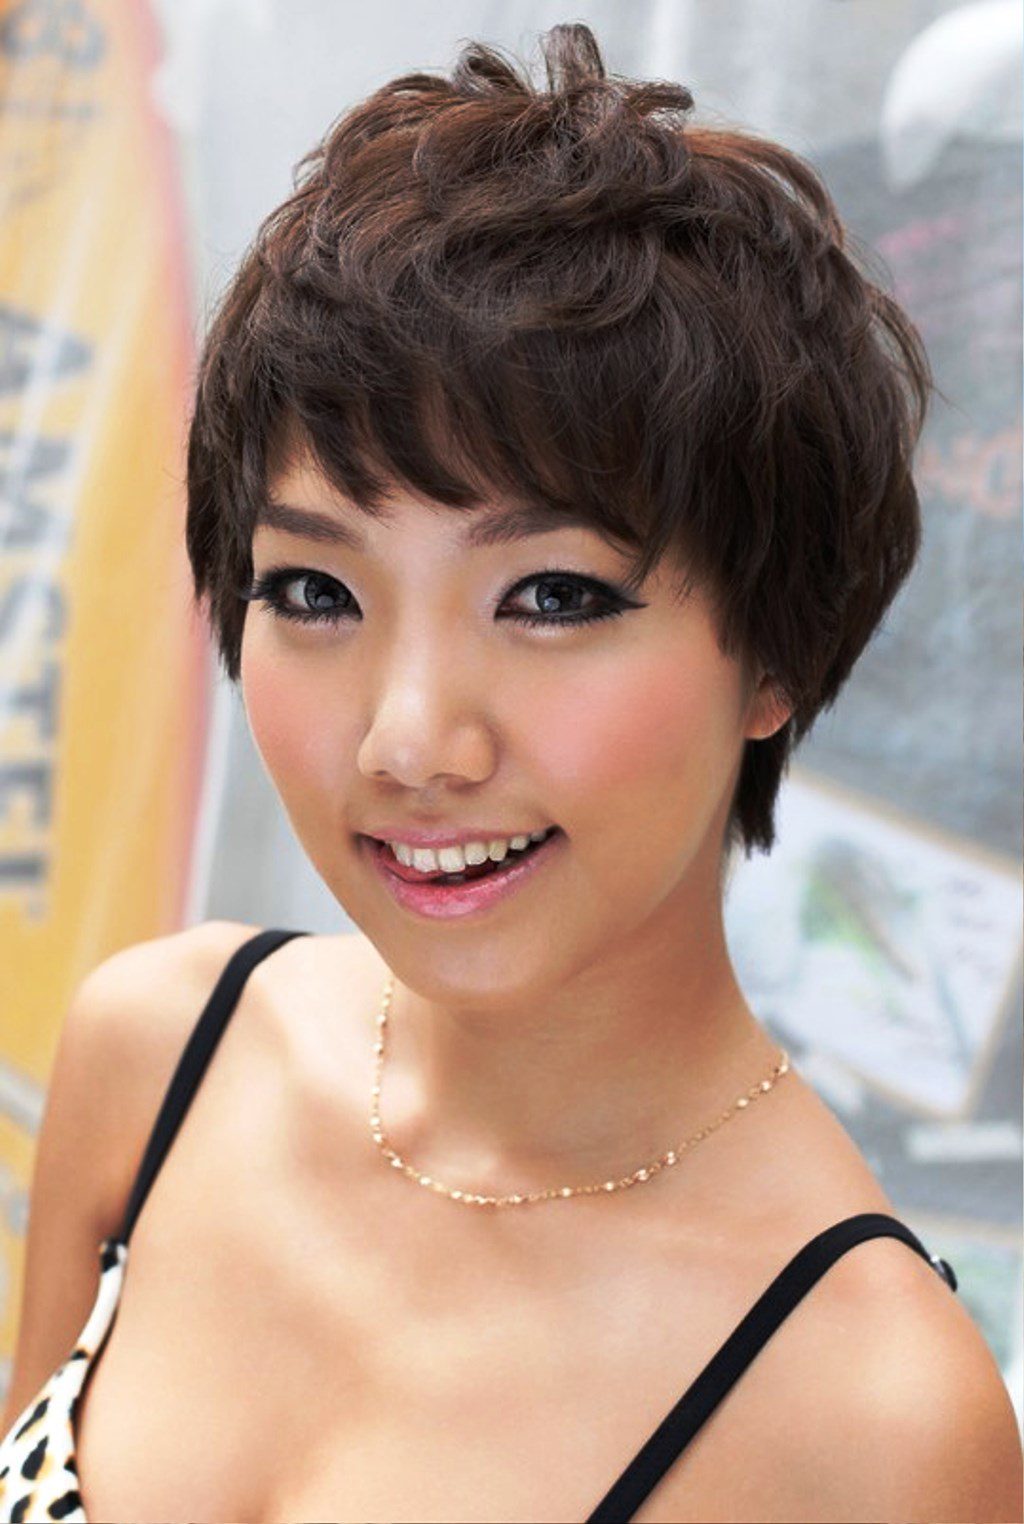 Hottest Boyish Short Asian Hairstyle For Girls